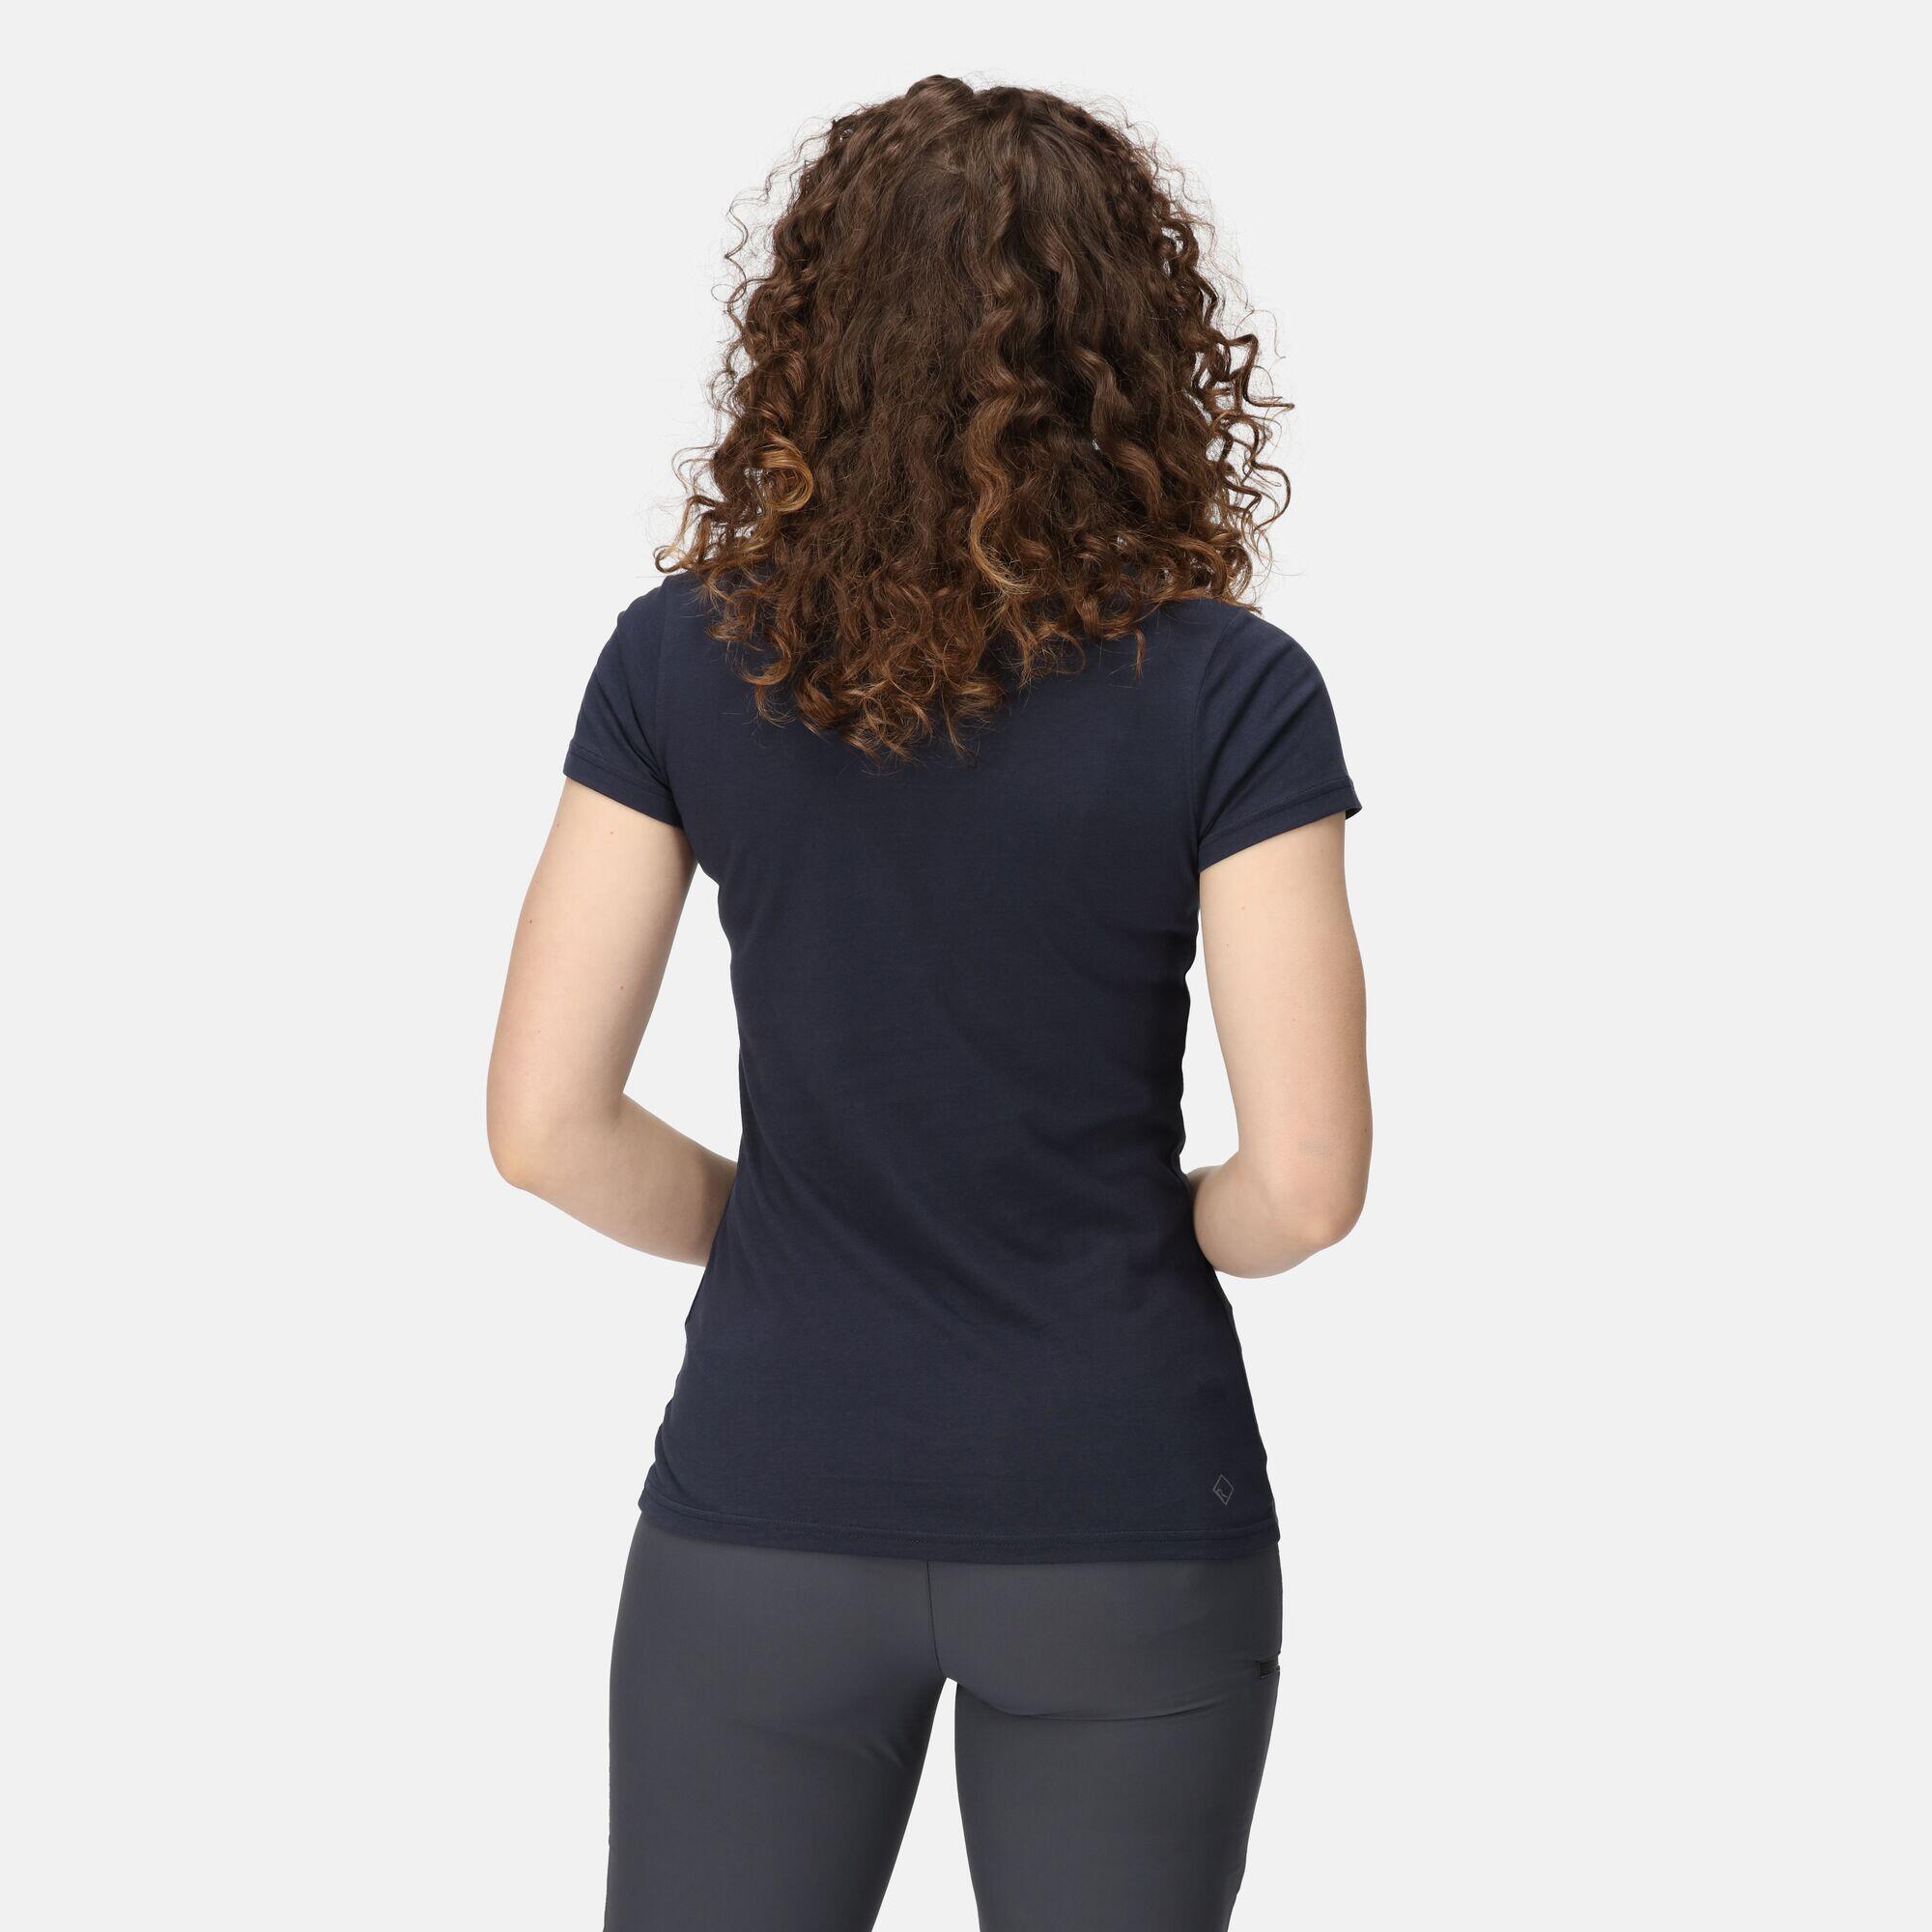 Sinton Women's Fitness Short Sleeve T-Shirt - Navy 2/5